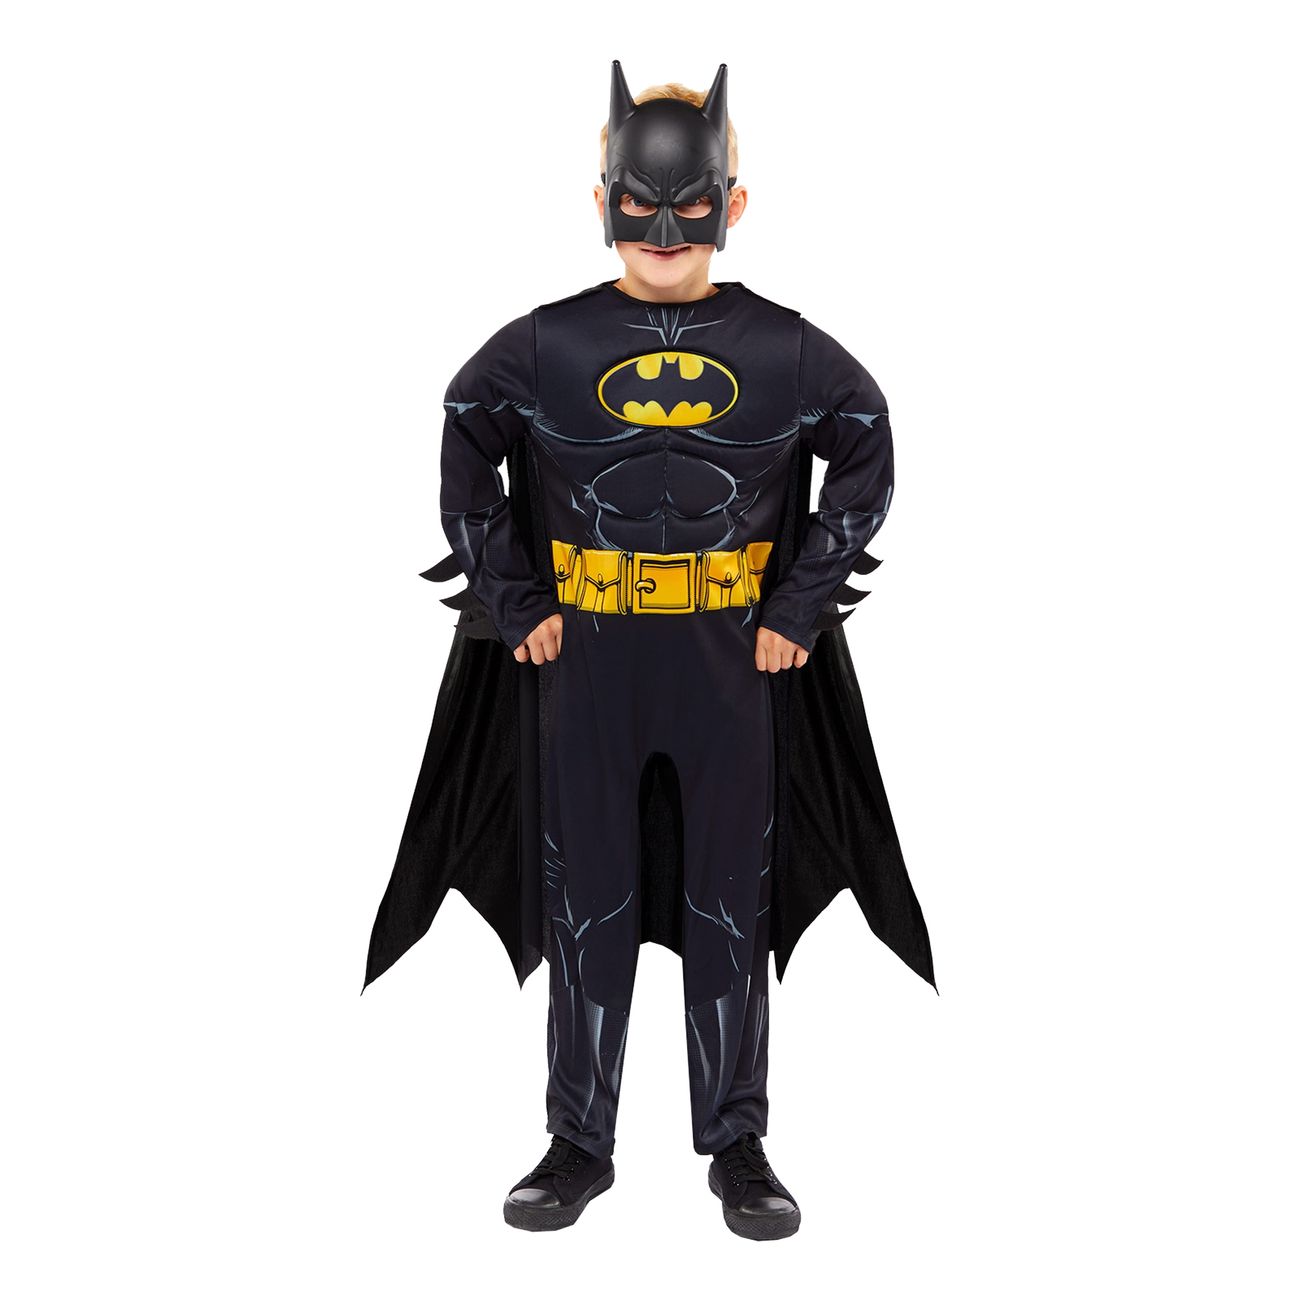 batman-comic-barn-maskeradddrakt-98186-1